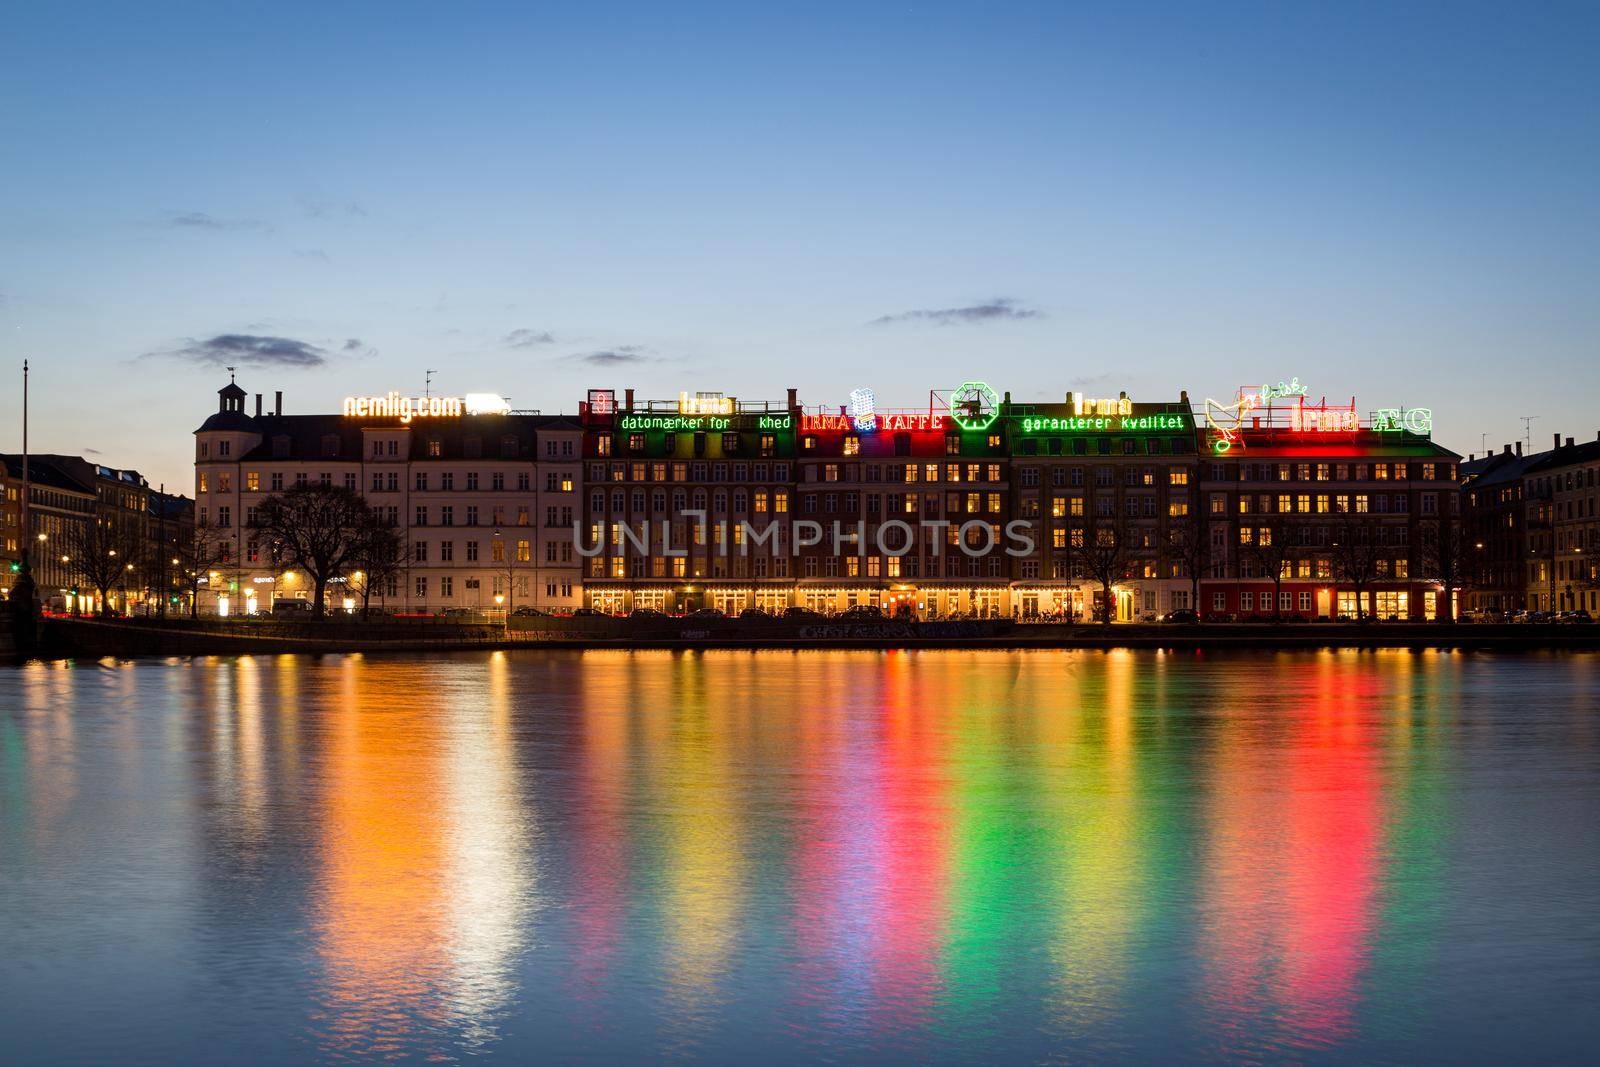 Neon Lights on Buildings in Copenhagen, Denmark by oliverfoerstner